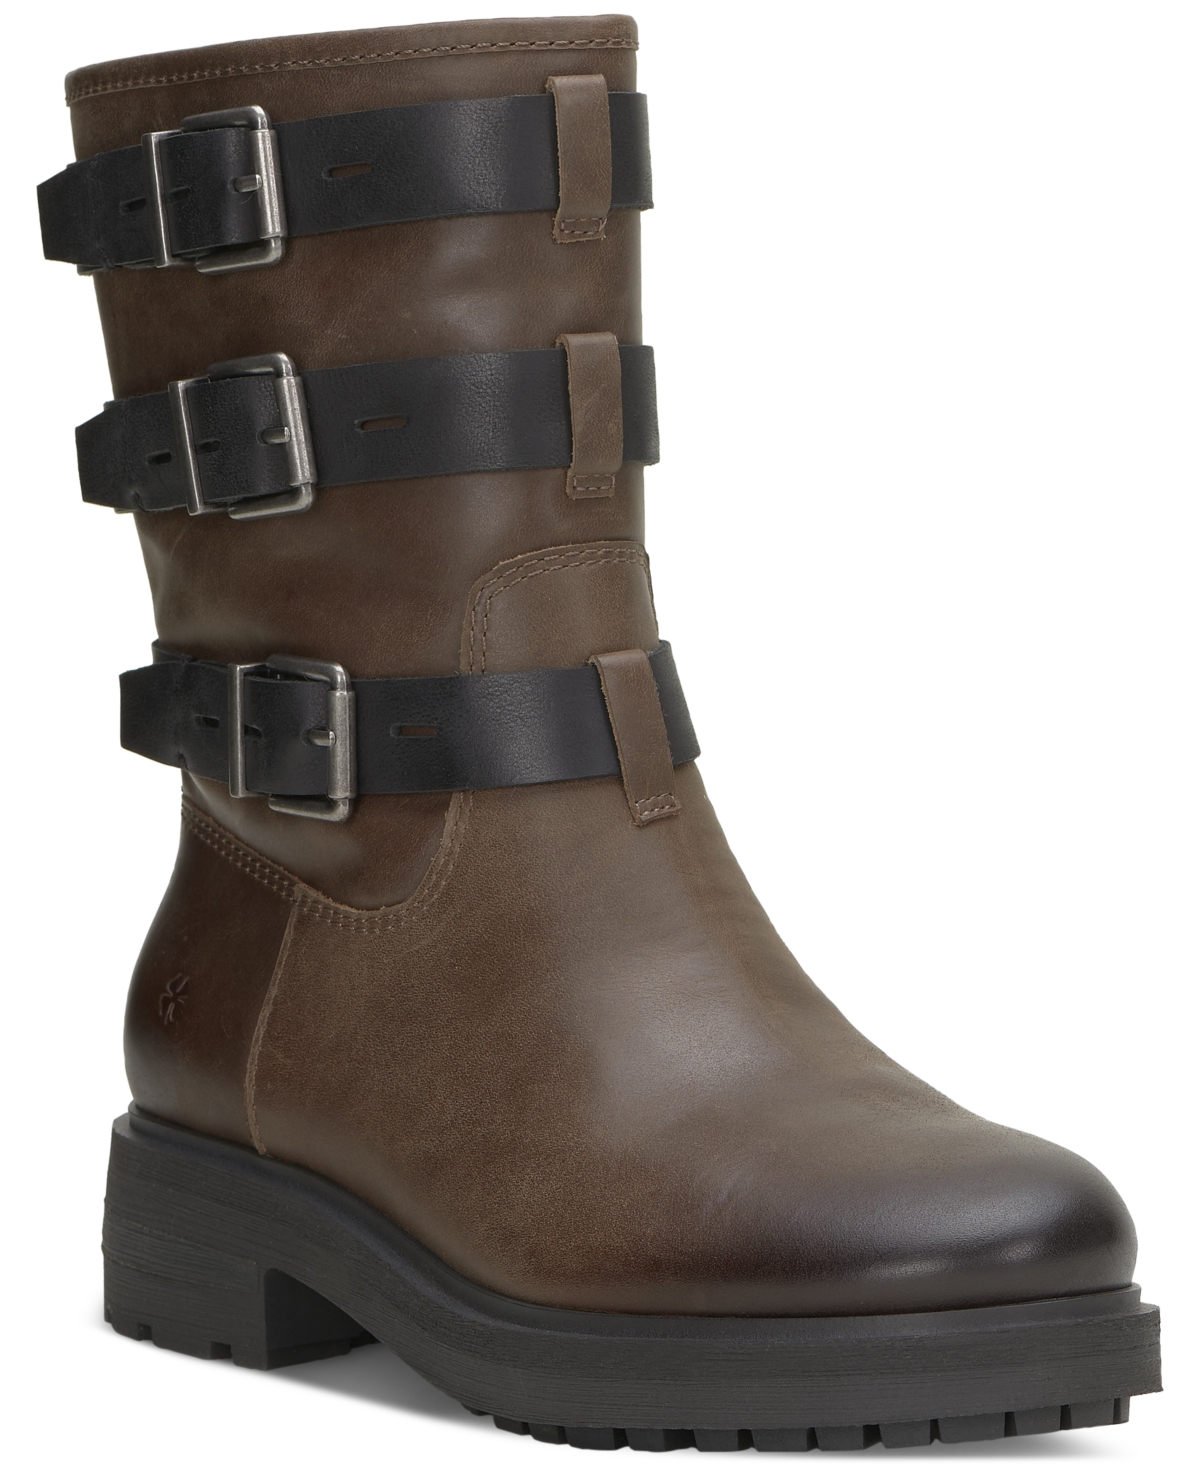 Women's Cheviss Moto Lug Sole Boots - Dark Dune Leather